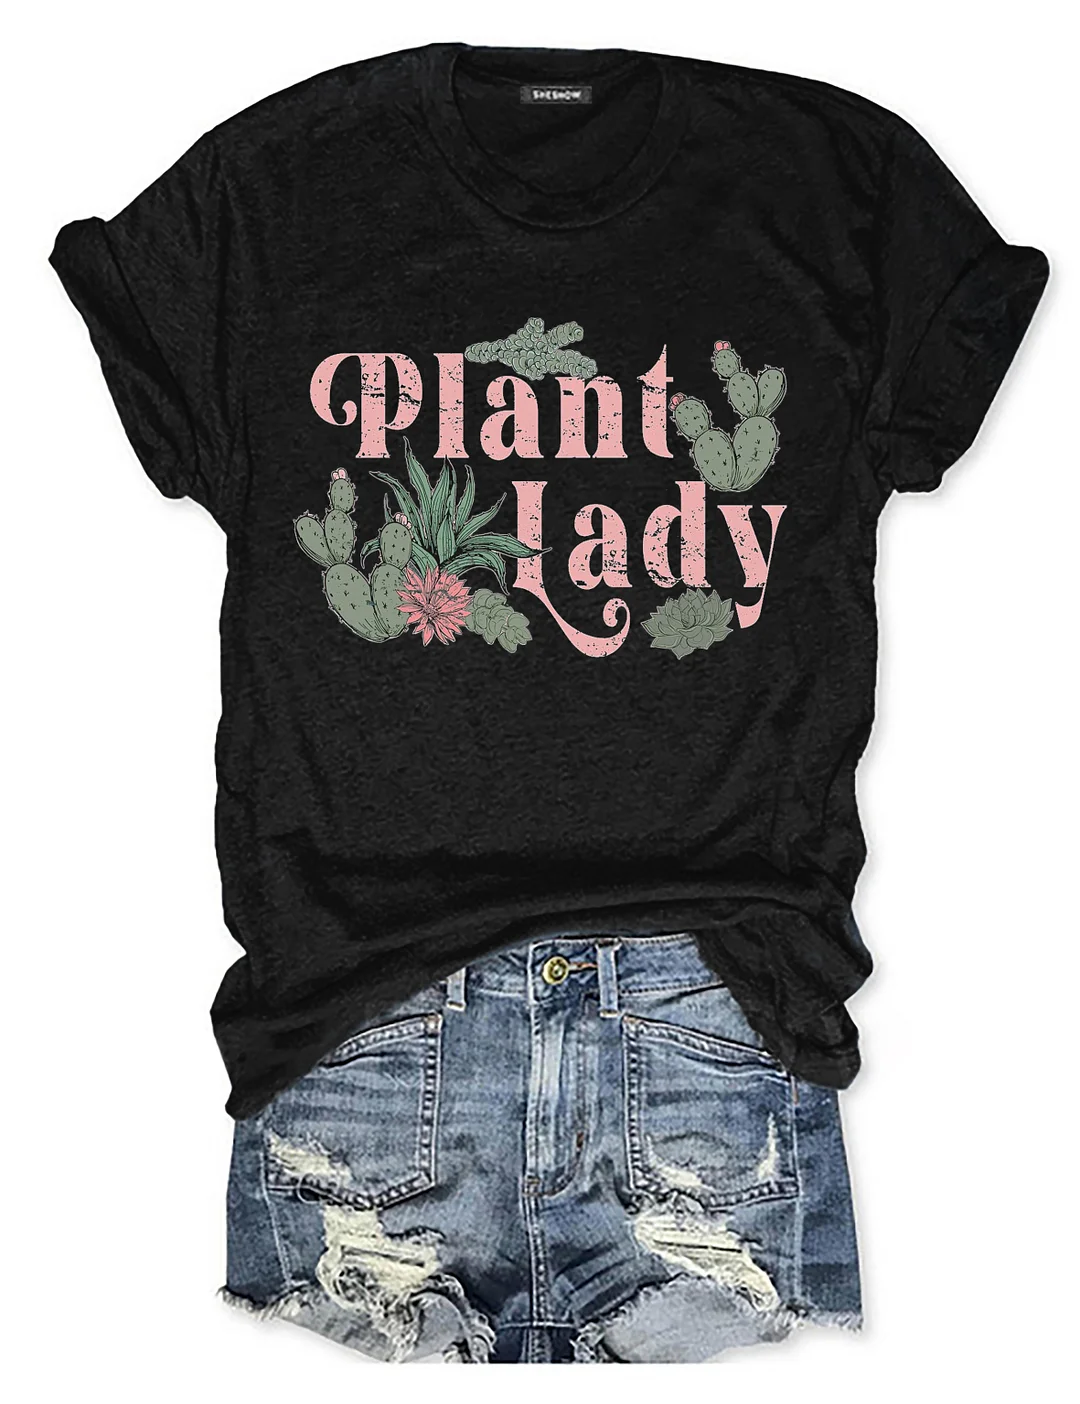 Plant Lady T-shirt